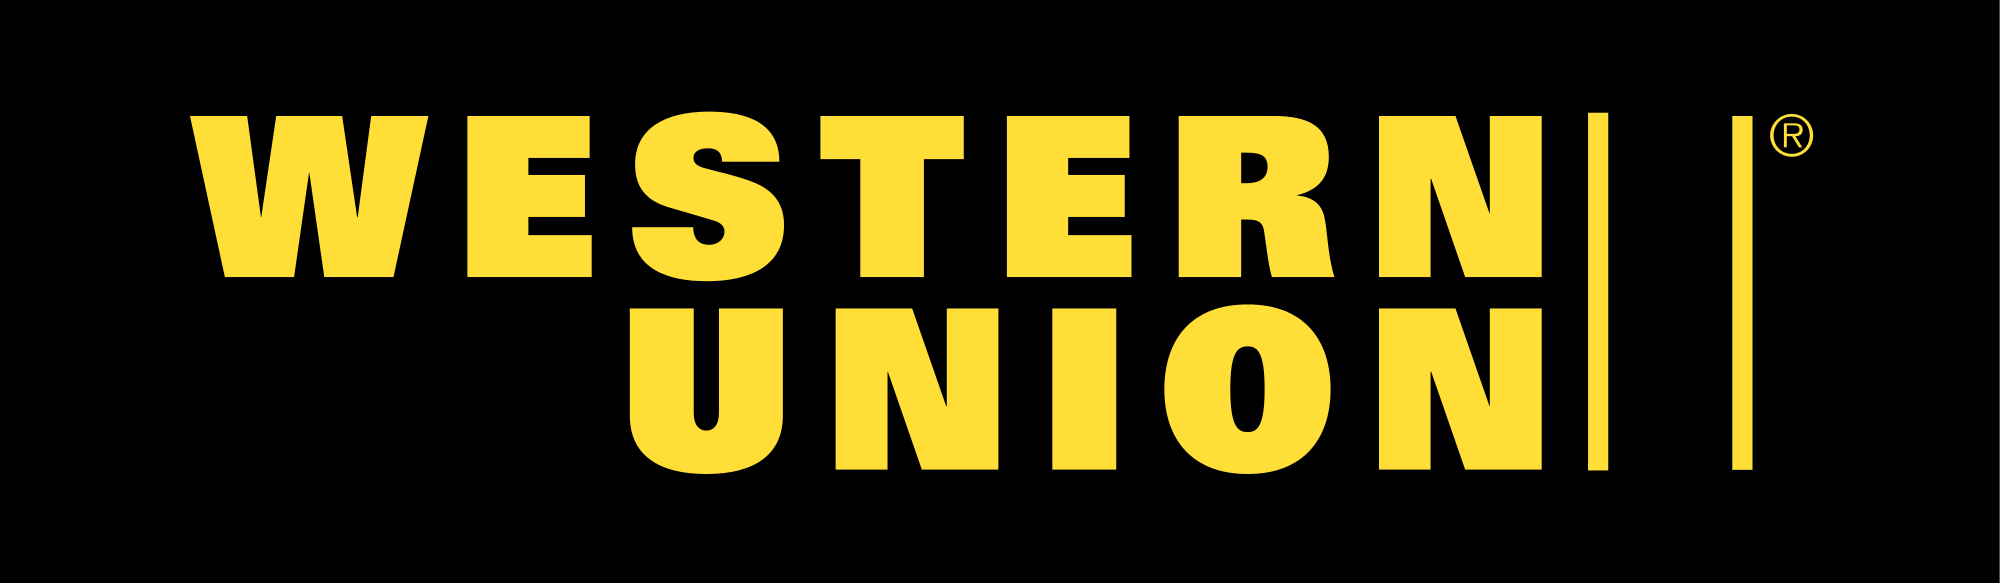 Western Union Logo - File:Western Union logo.svg - Wikimedia Commons